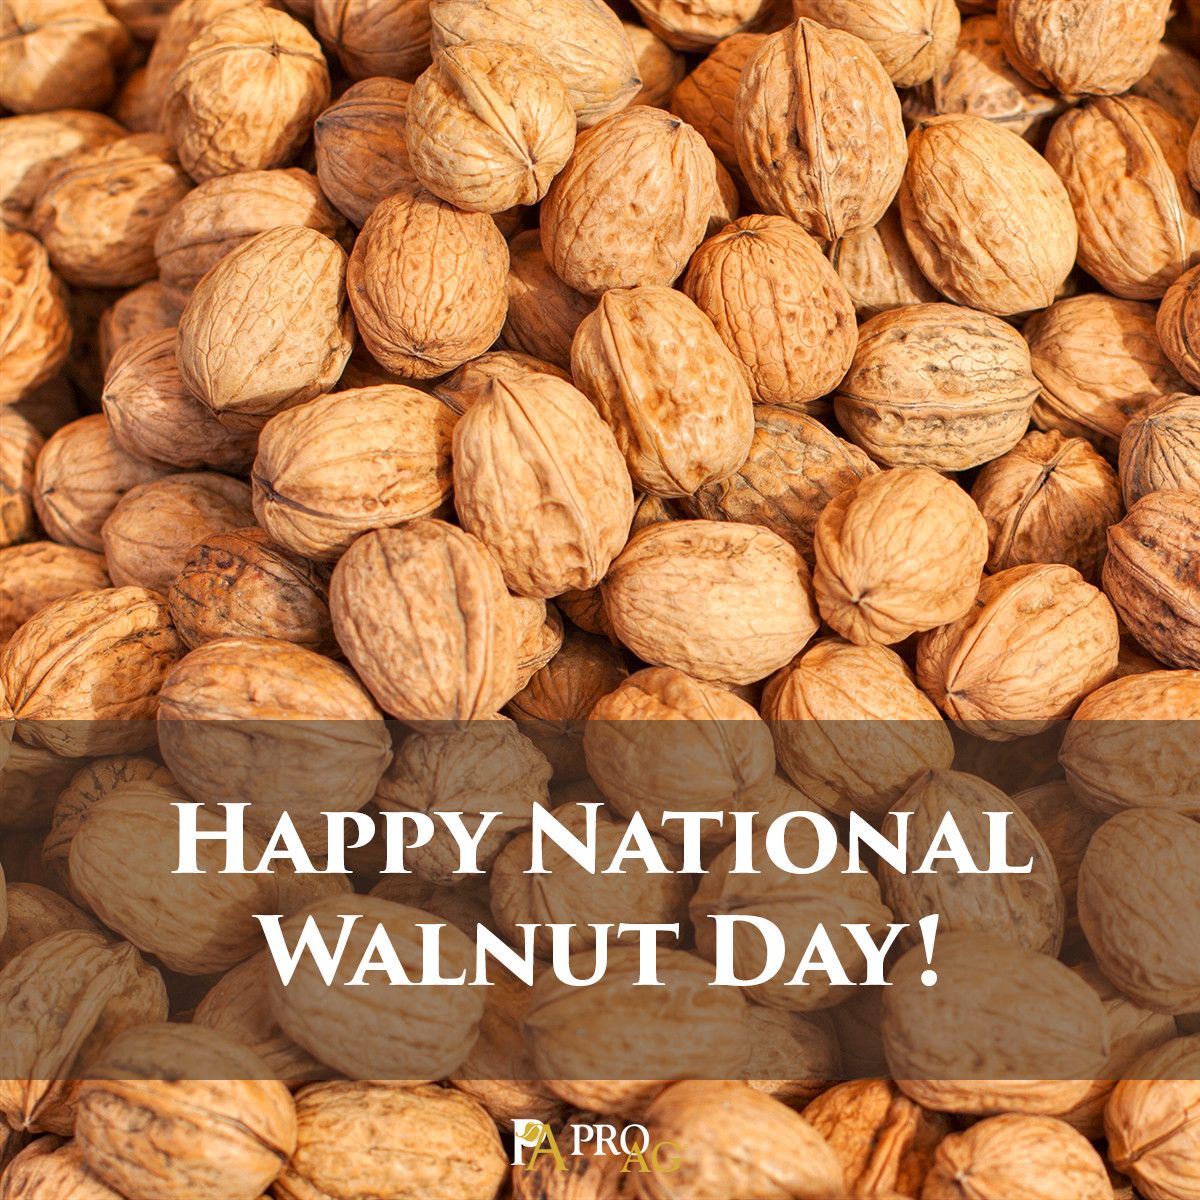 National Walnut Day May 17, 2016 | ProAg